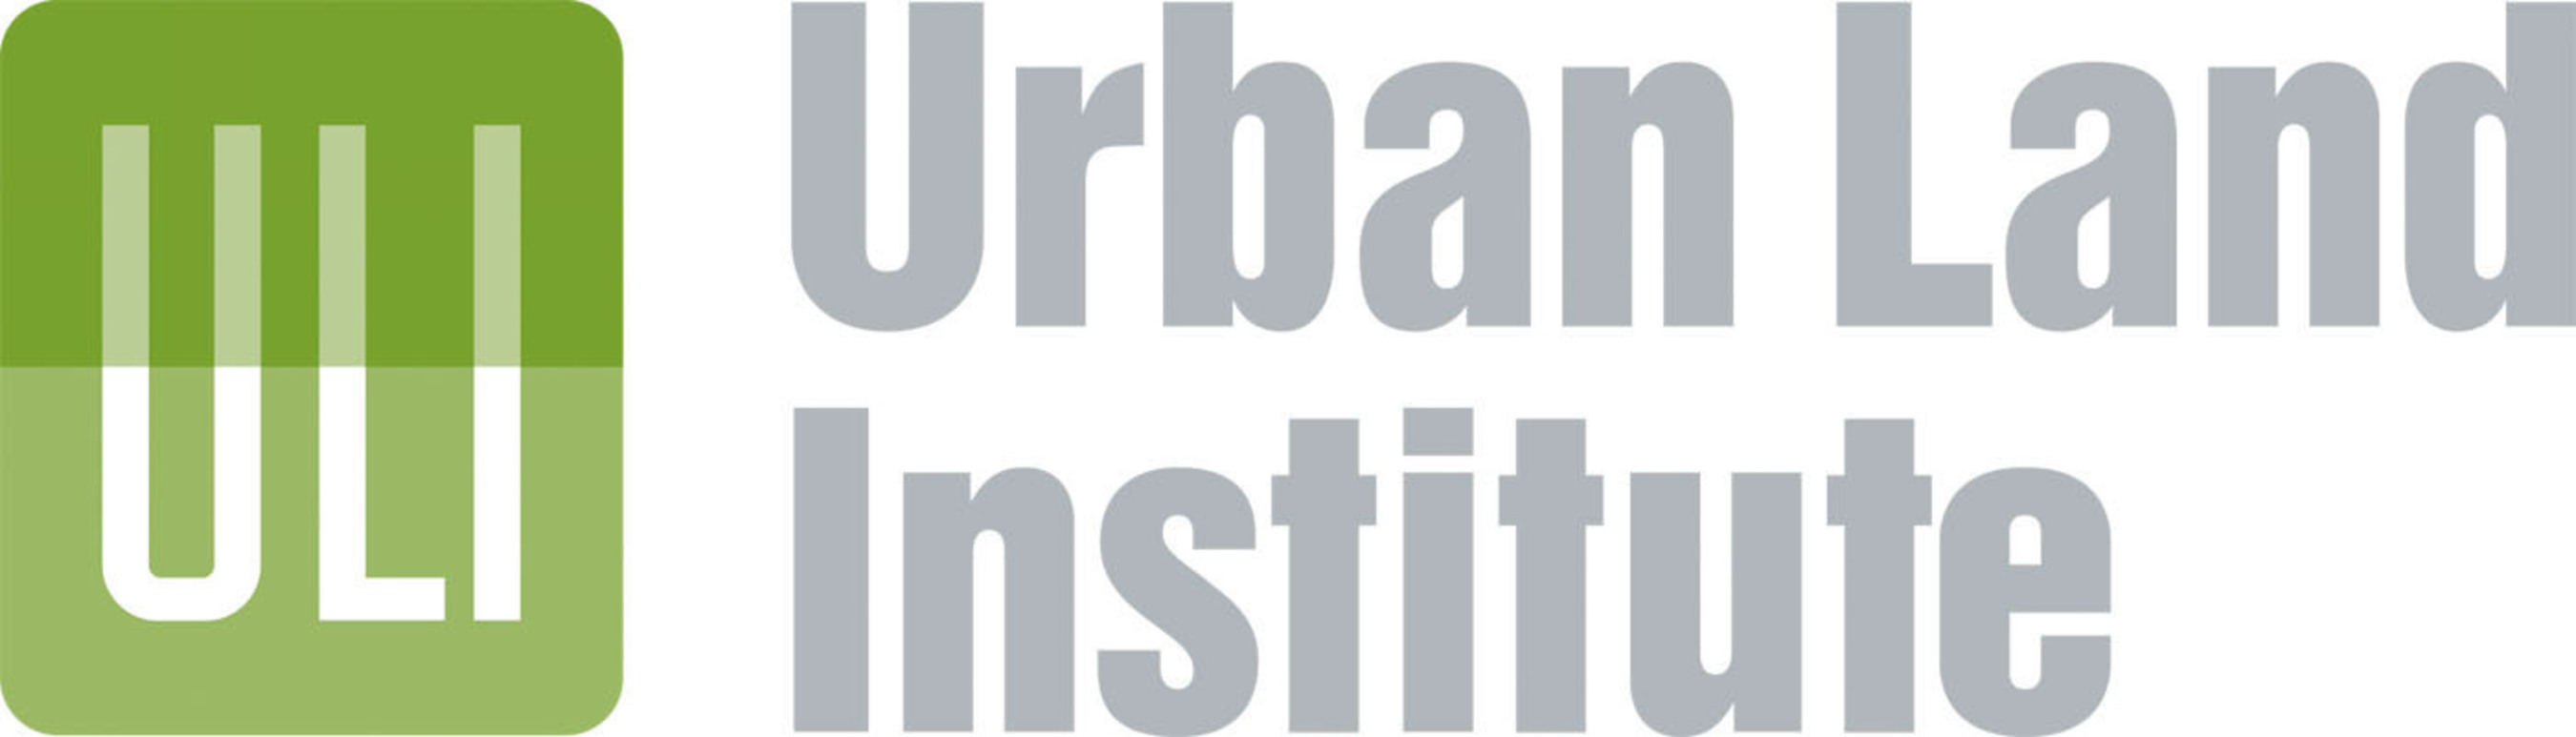 Urban Land Institute (ULI) about